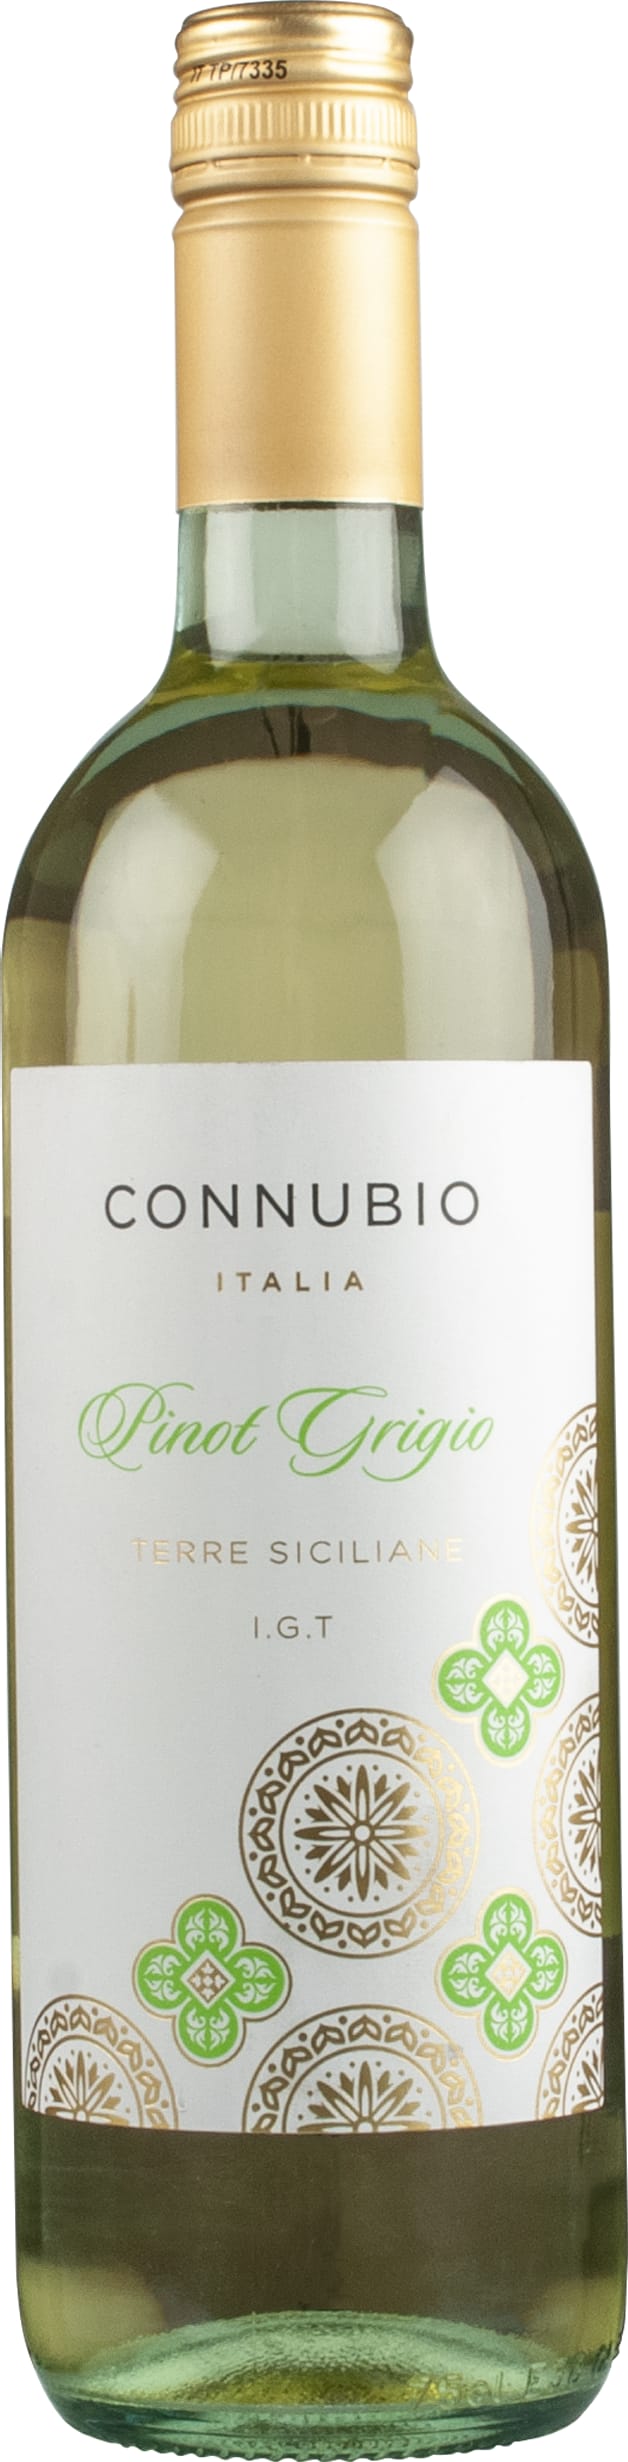 Pinot Grigio IGT Terre Siciliane 22 Connubio 75cl - Buy Connubio Wines from GREAT WINES DIRECT wine shop